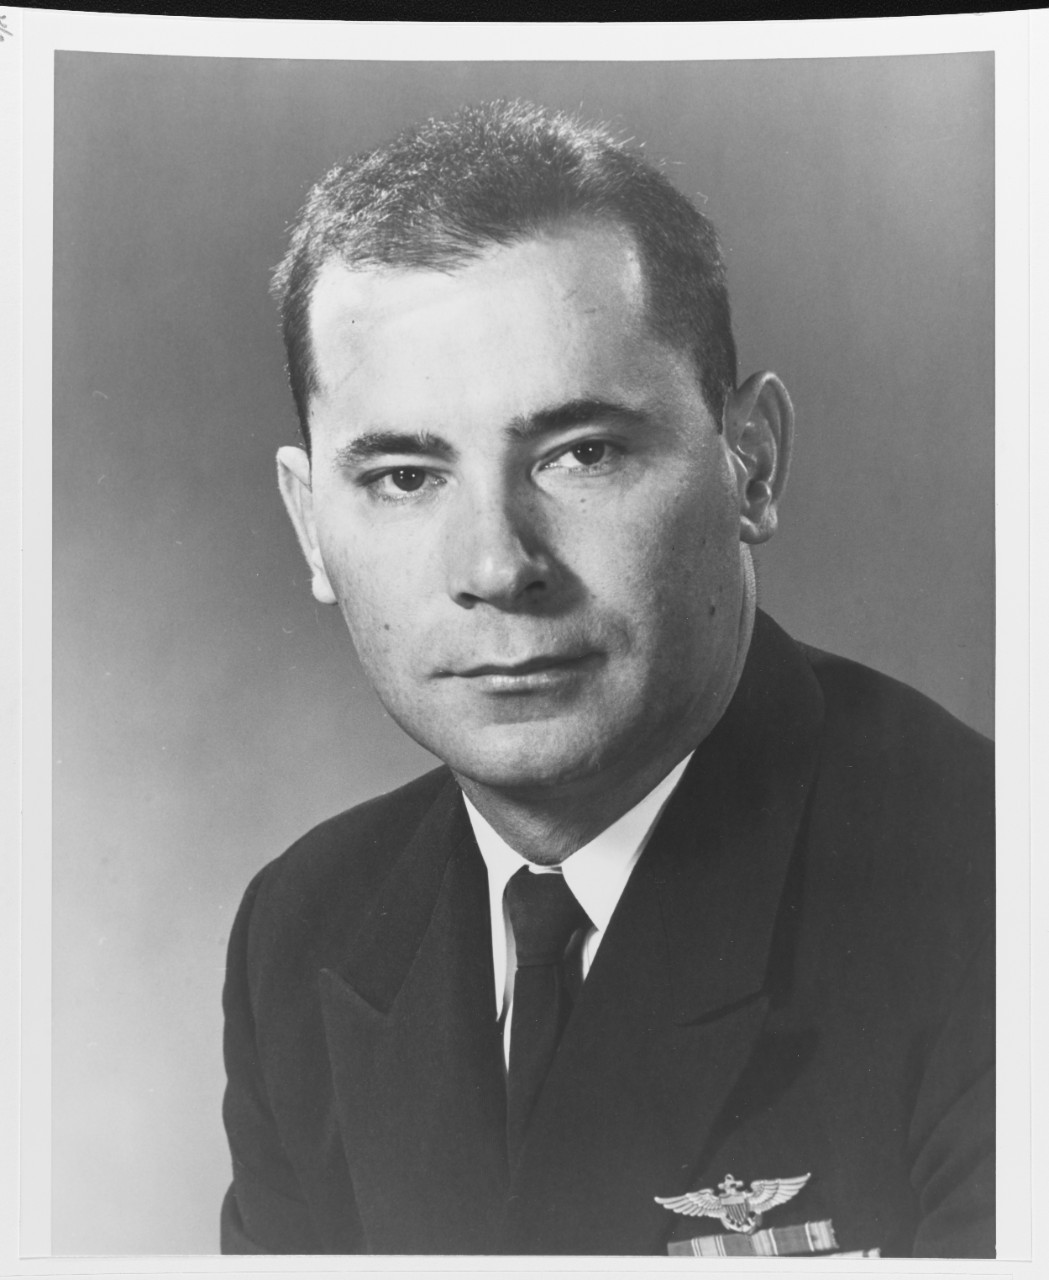 Lieutenant Walter R. Lewison, USN